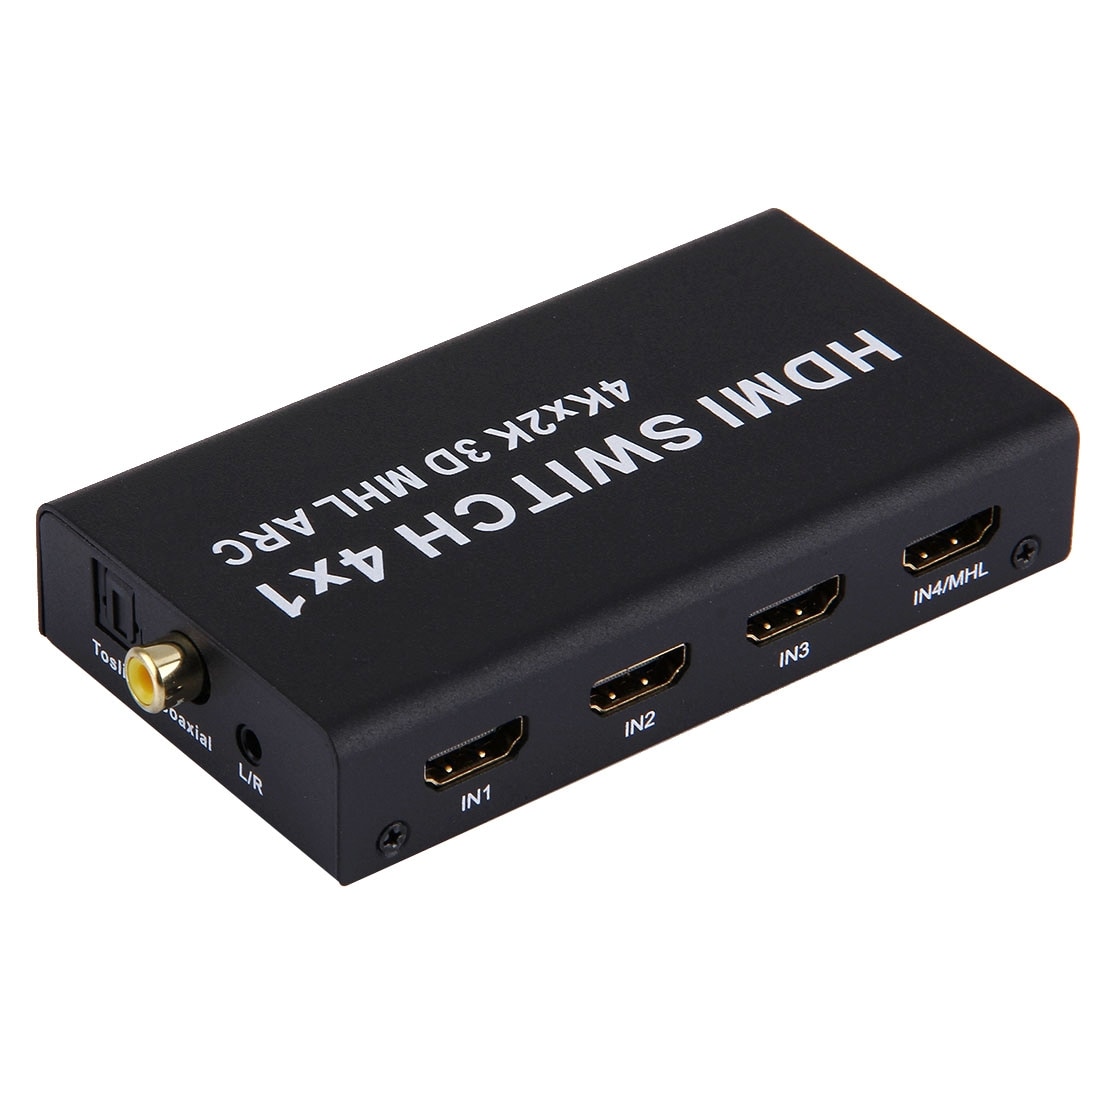 HDMI 4K 4x1 Multi-funktion Switch - ARC / MHL - Fjern inngår